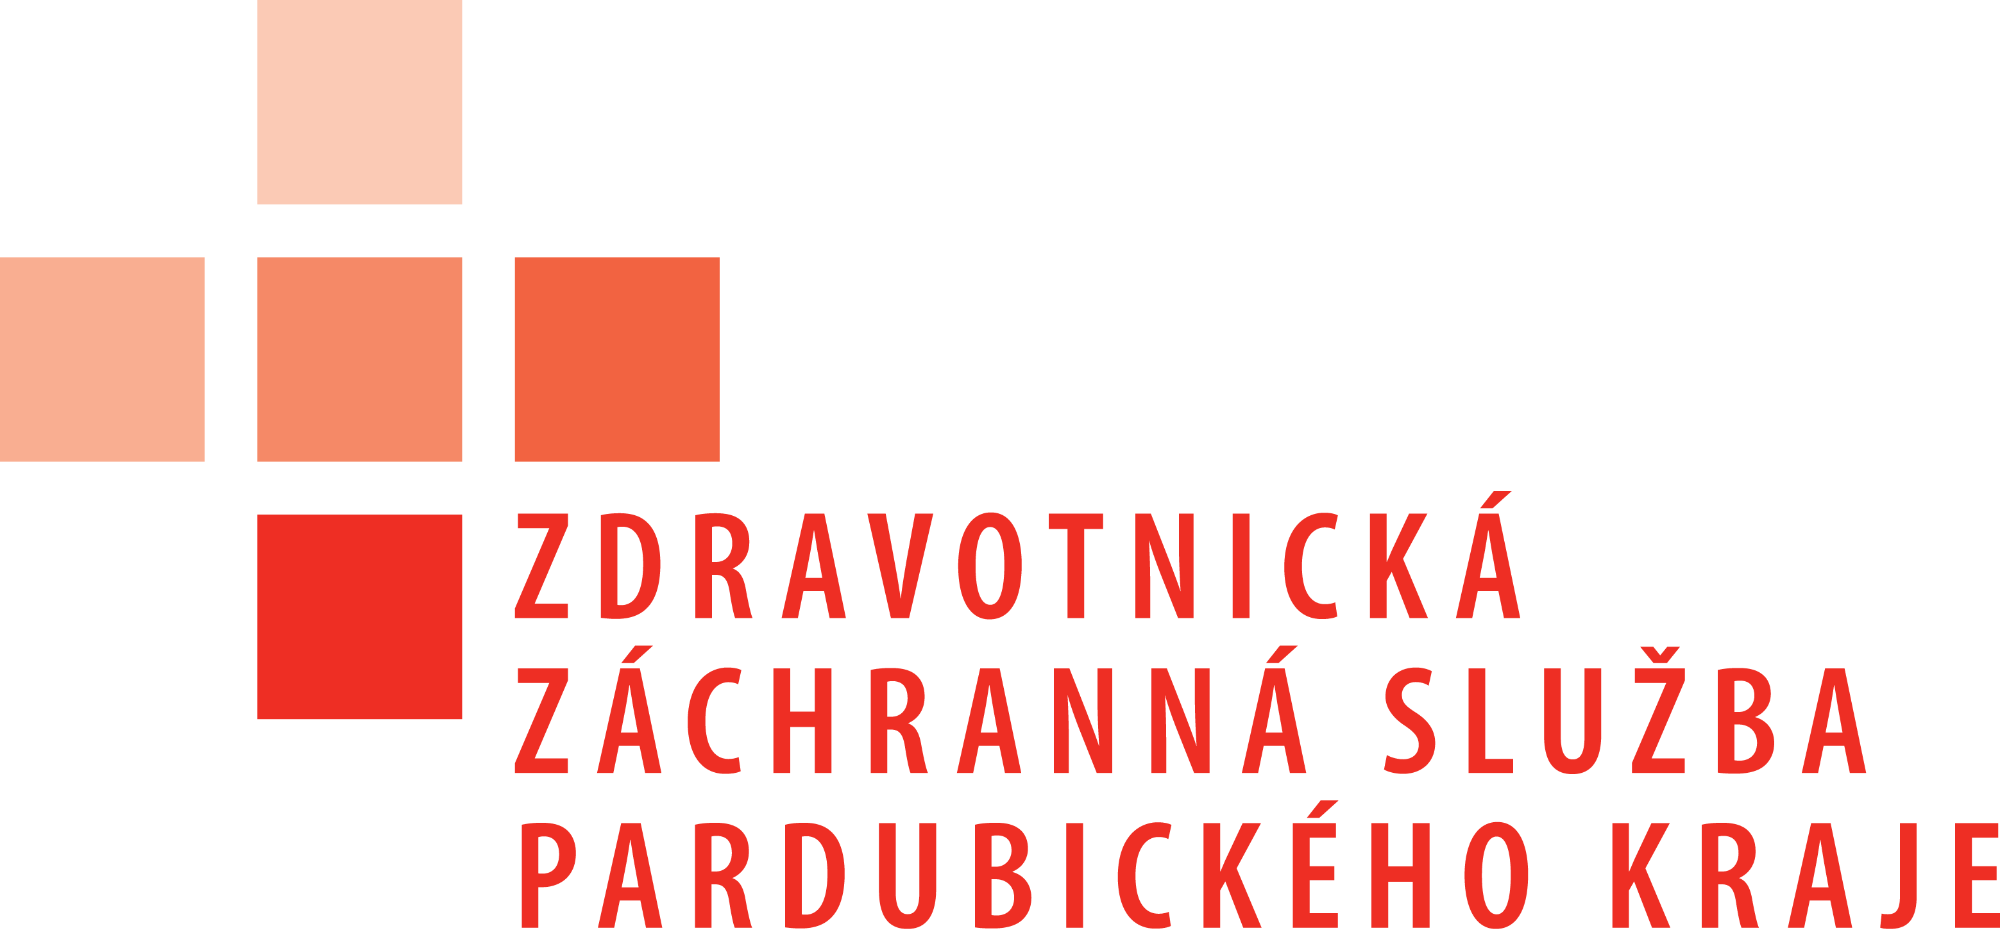 Pardubice Regional Emergency Medical Services